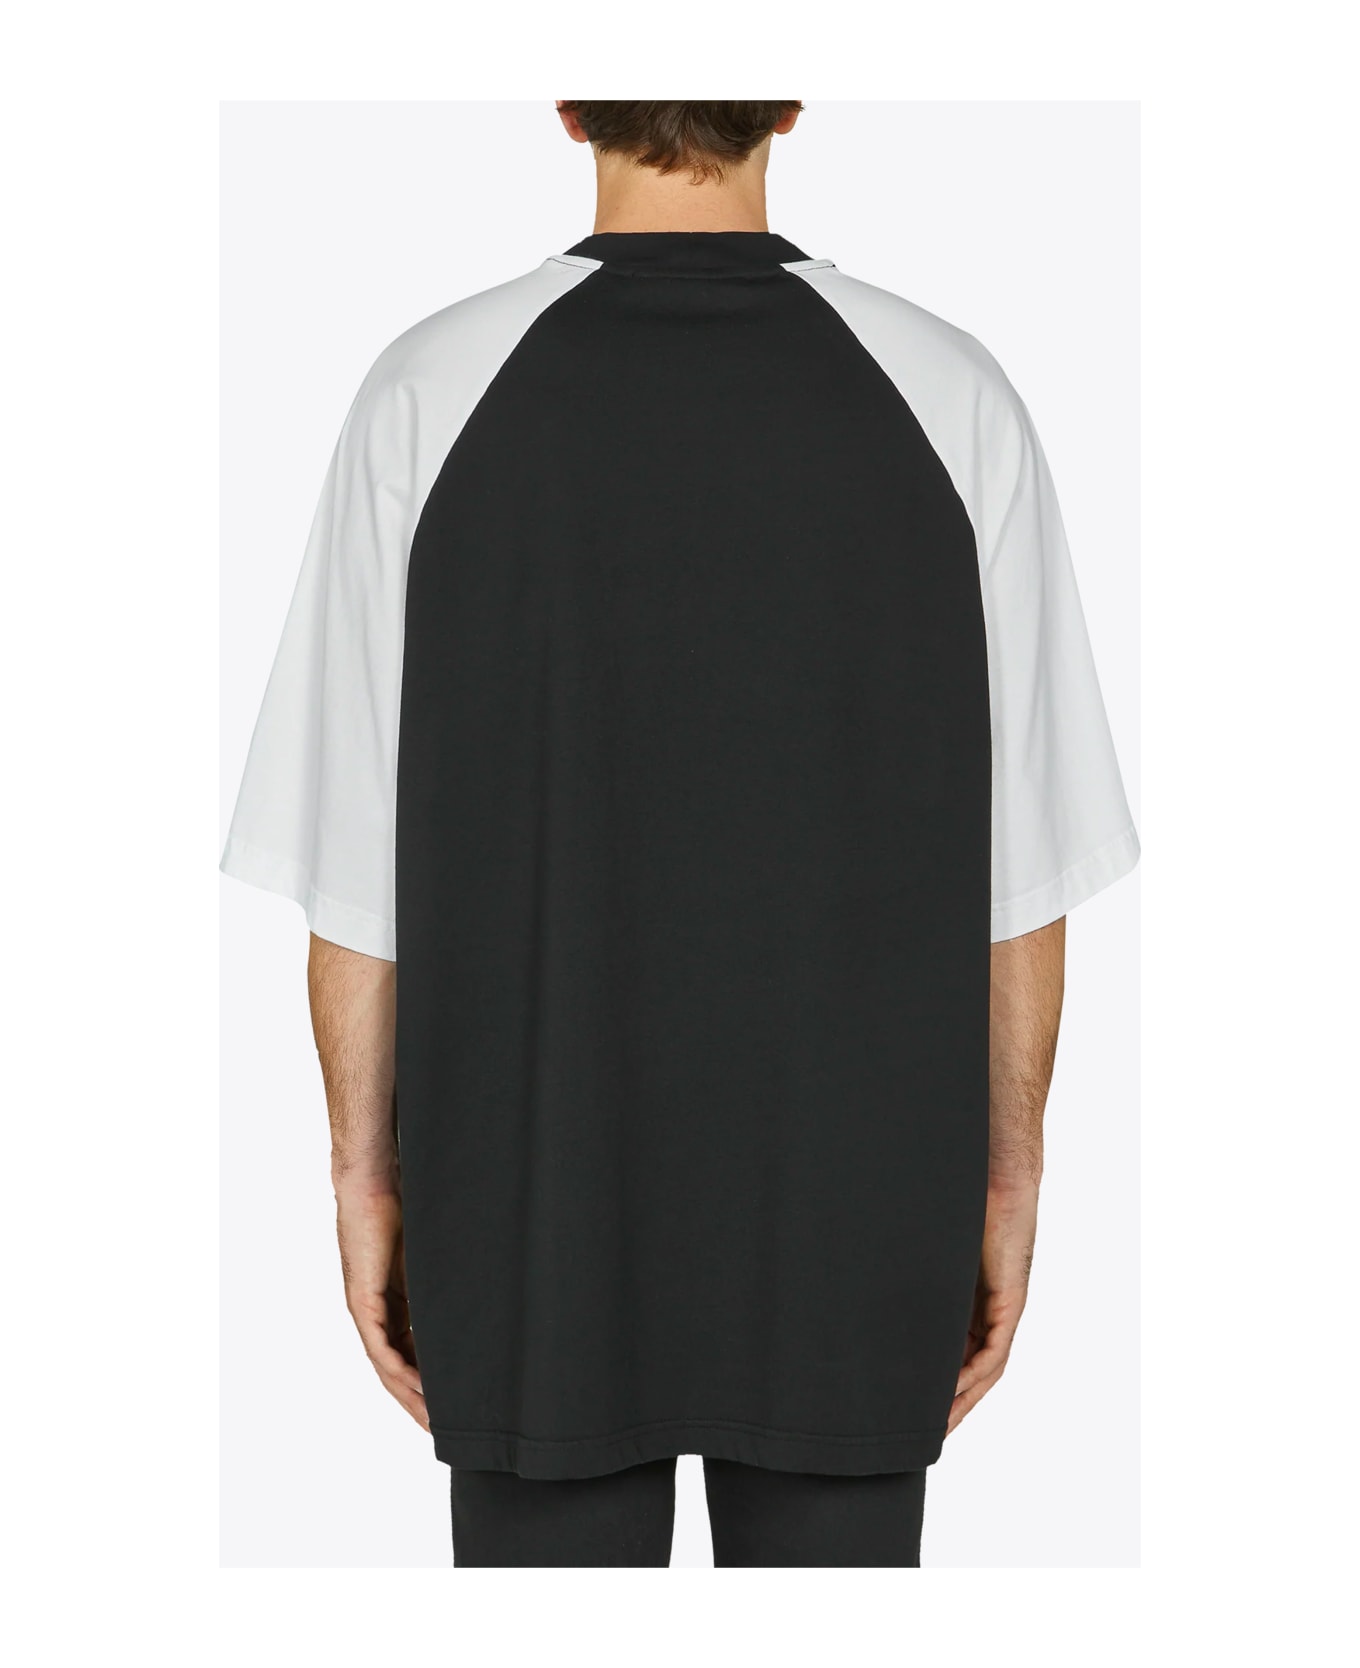 1017 ALYX 9SM Oversize Logo Raglan T-shirt Black And White Raglan Sleeves T-shirt - Oversize Logo Raglan T-shirt - Nero/bianco